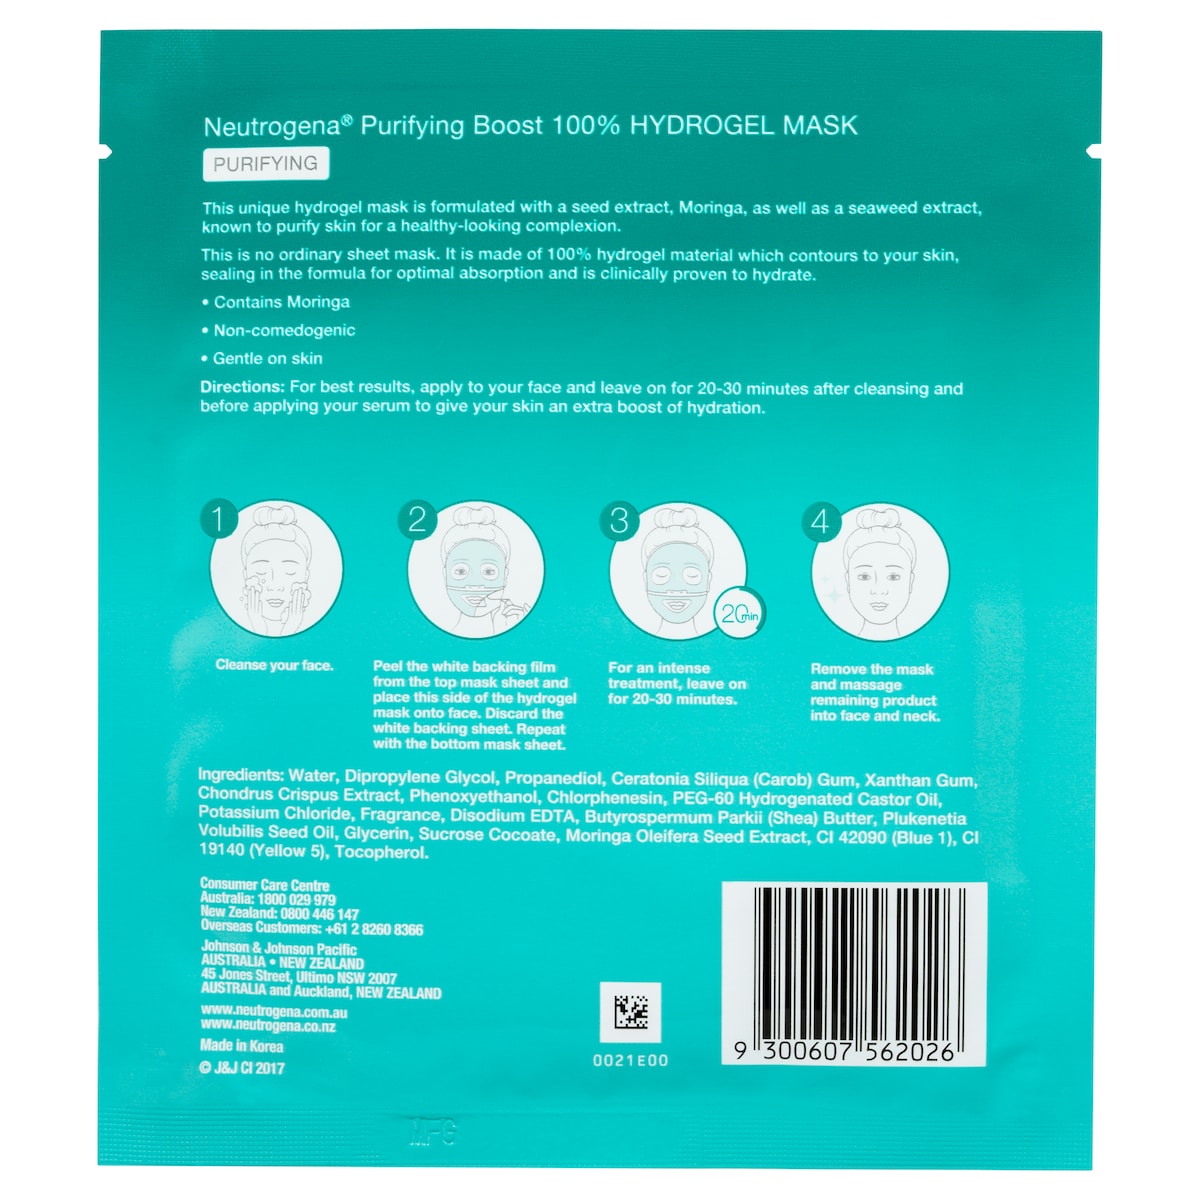 Neutrogena Purifying Boost Purifying Hydrogel Mask 30G